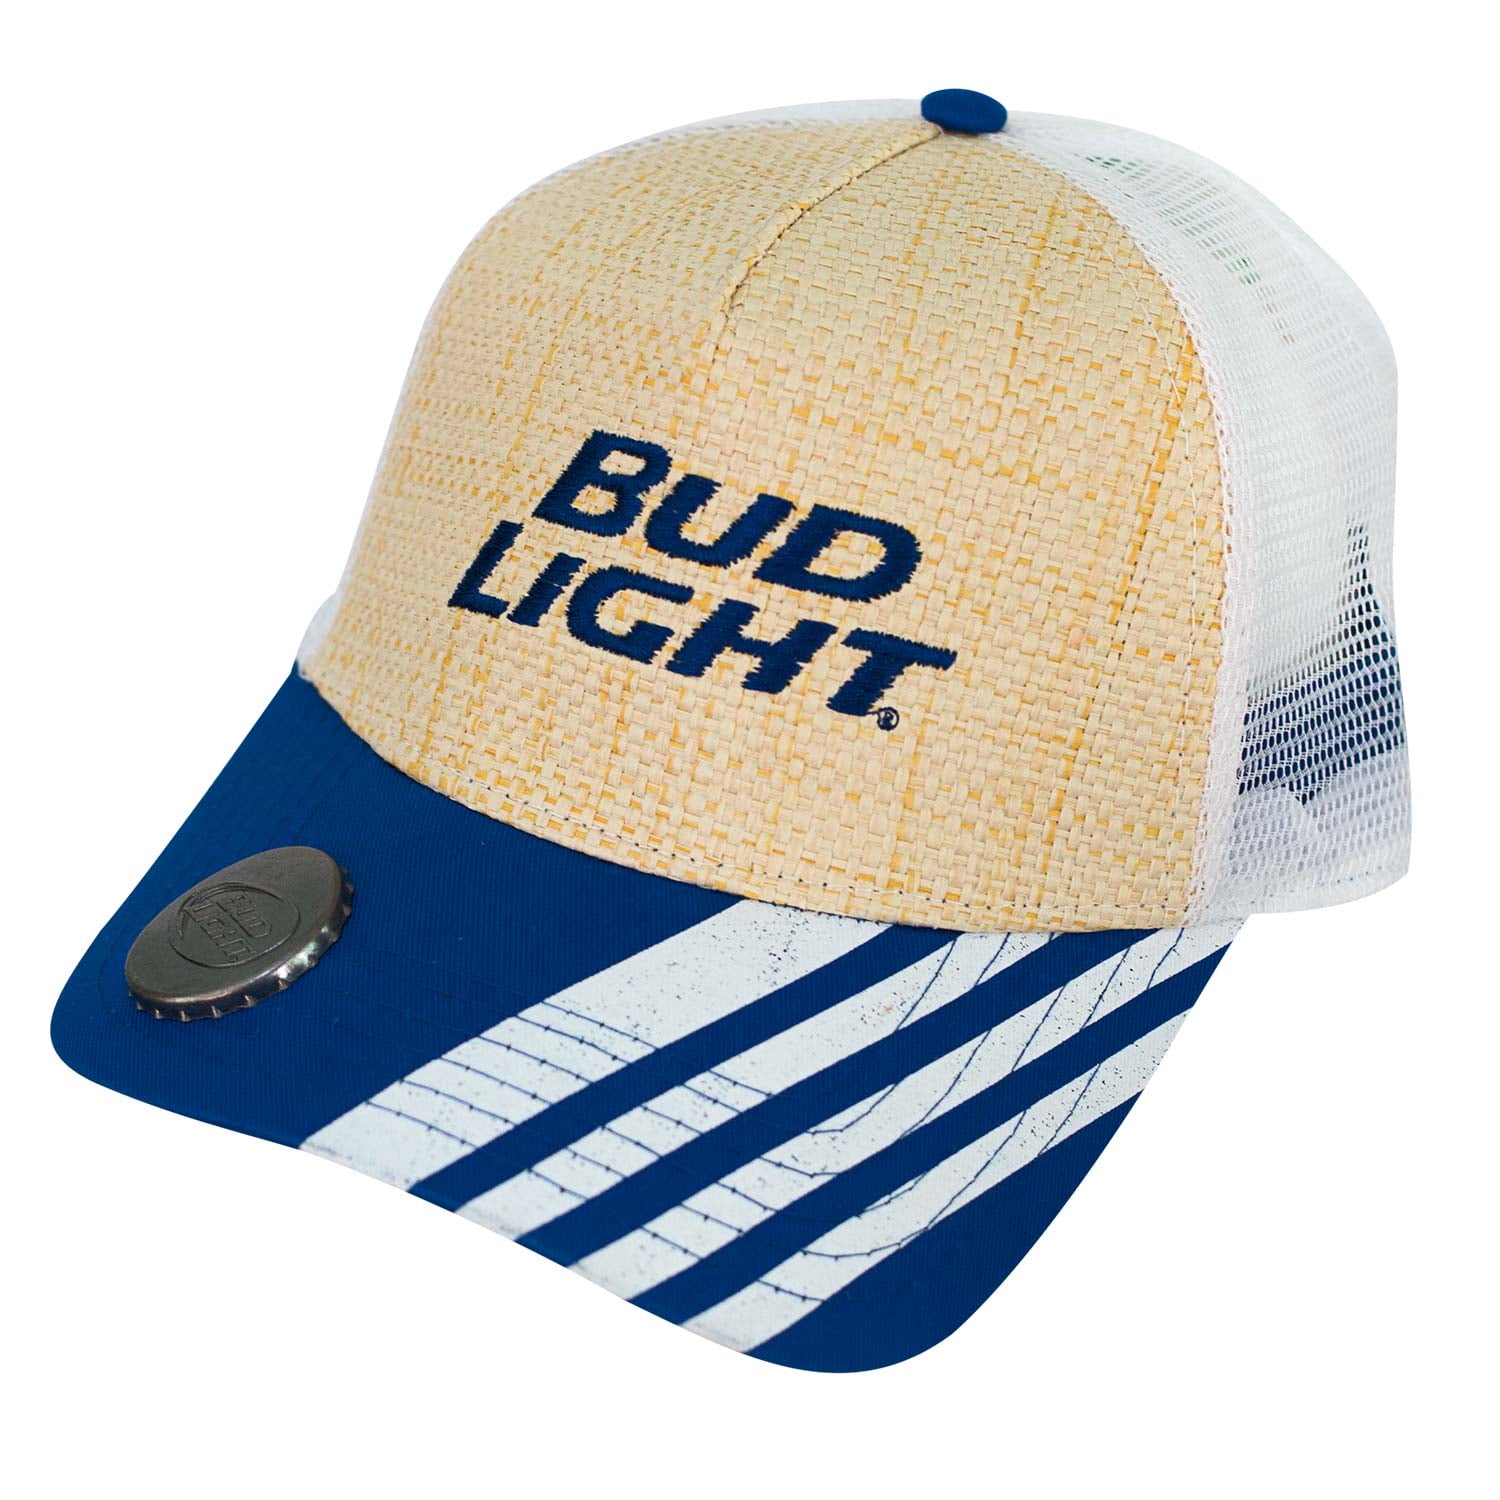 Light hat